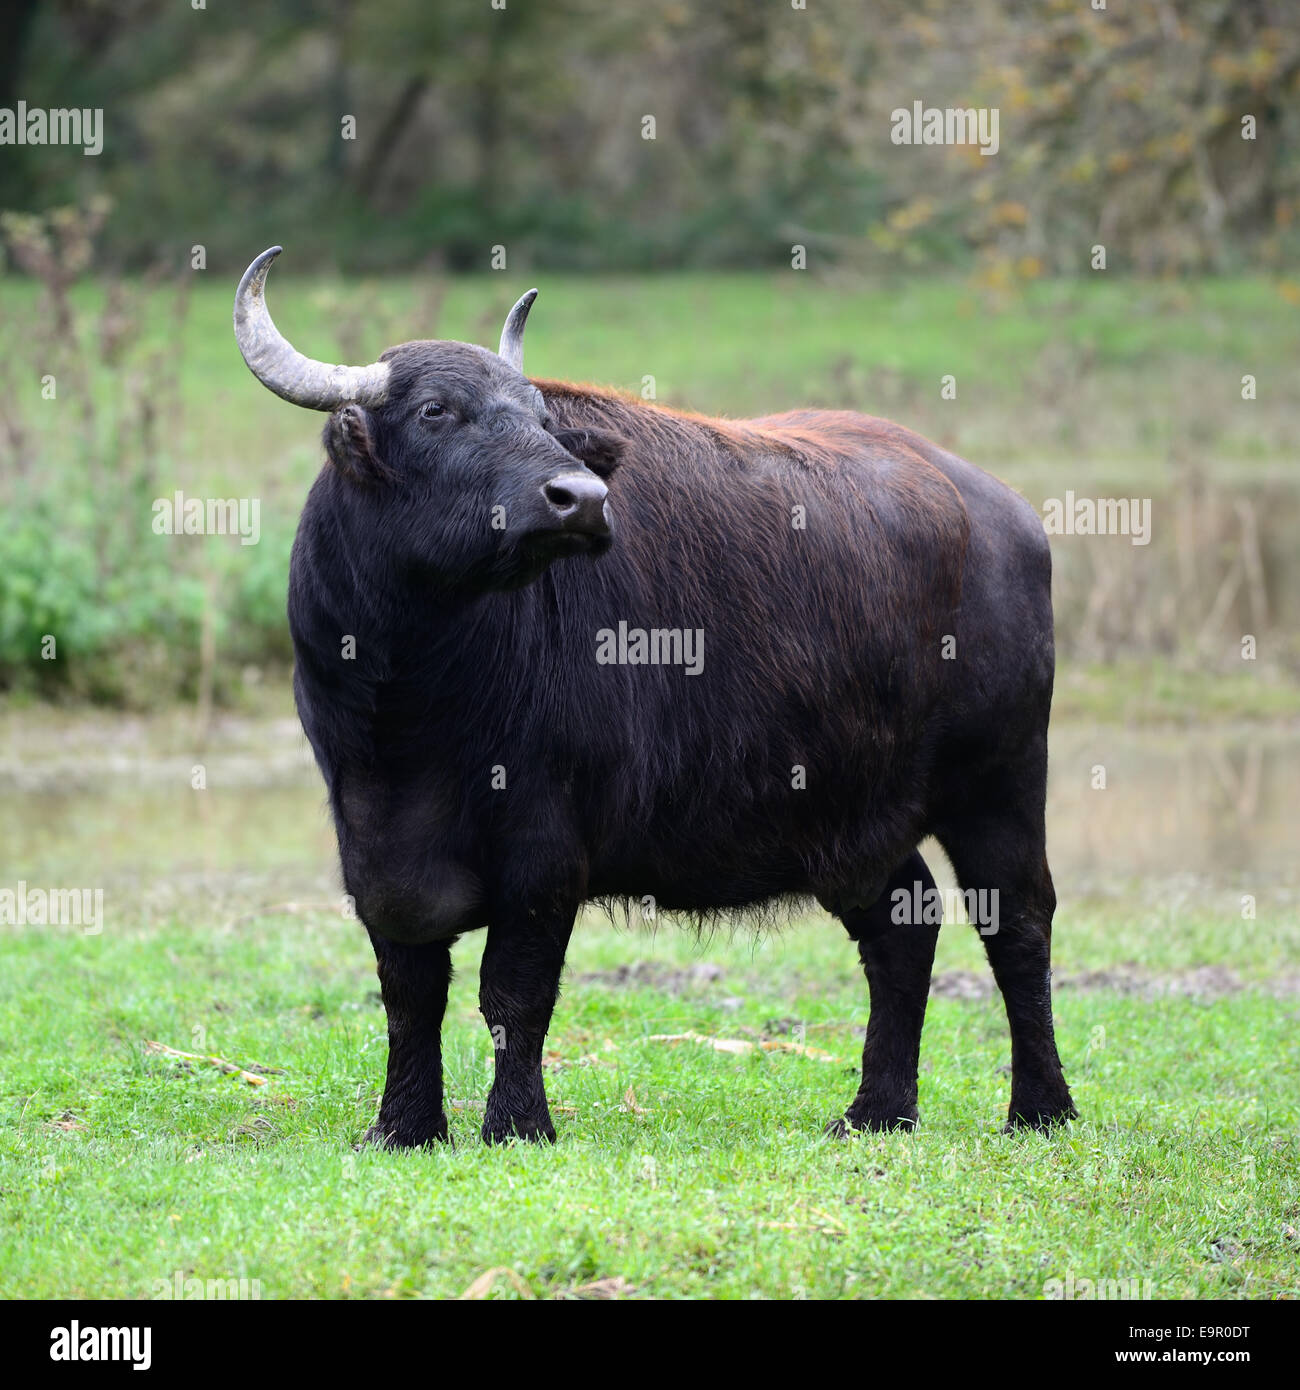 A wild water buffalo (Bos Bubalus domesticus) at Szecsisziget (Hungary, Zala county) reservation. Stock Photo